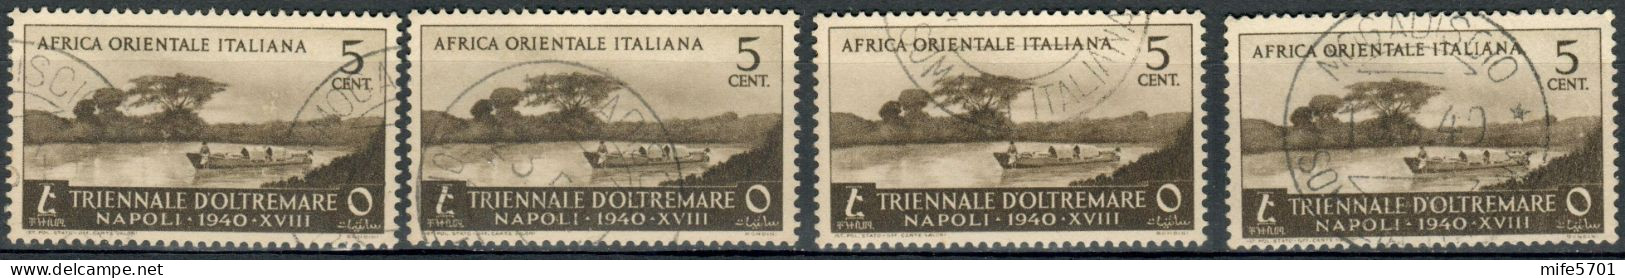 REGNO AFRICA ORIENTALE ITALIANA 1940 A.O.I. 1ª MOSTRA TRIENNALE D'OLTREMARE 4 ESEMPLARI DA C. 5 USATI - SASSONE 27 - Italiaans Oost-Afrika